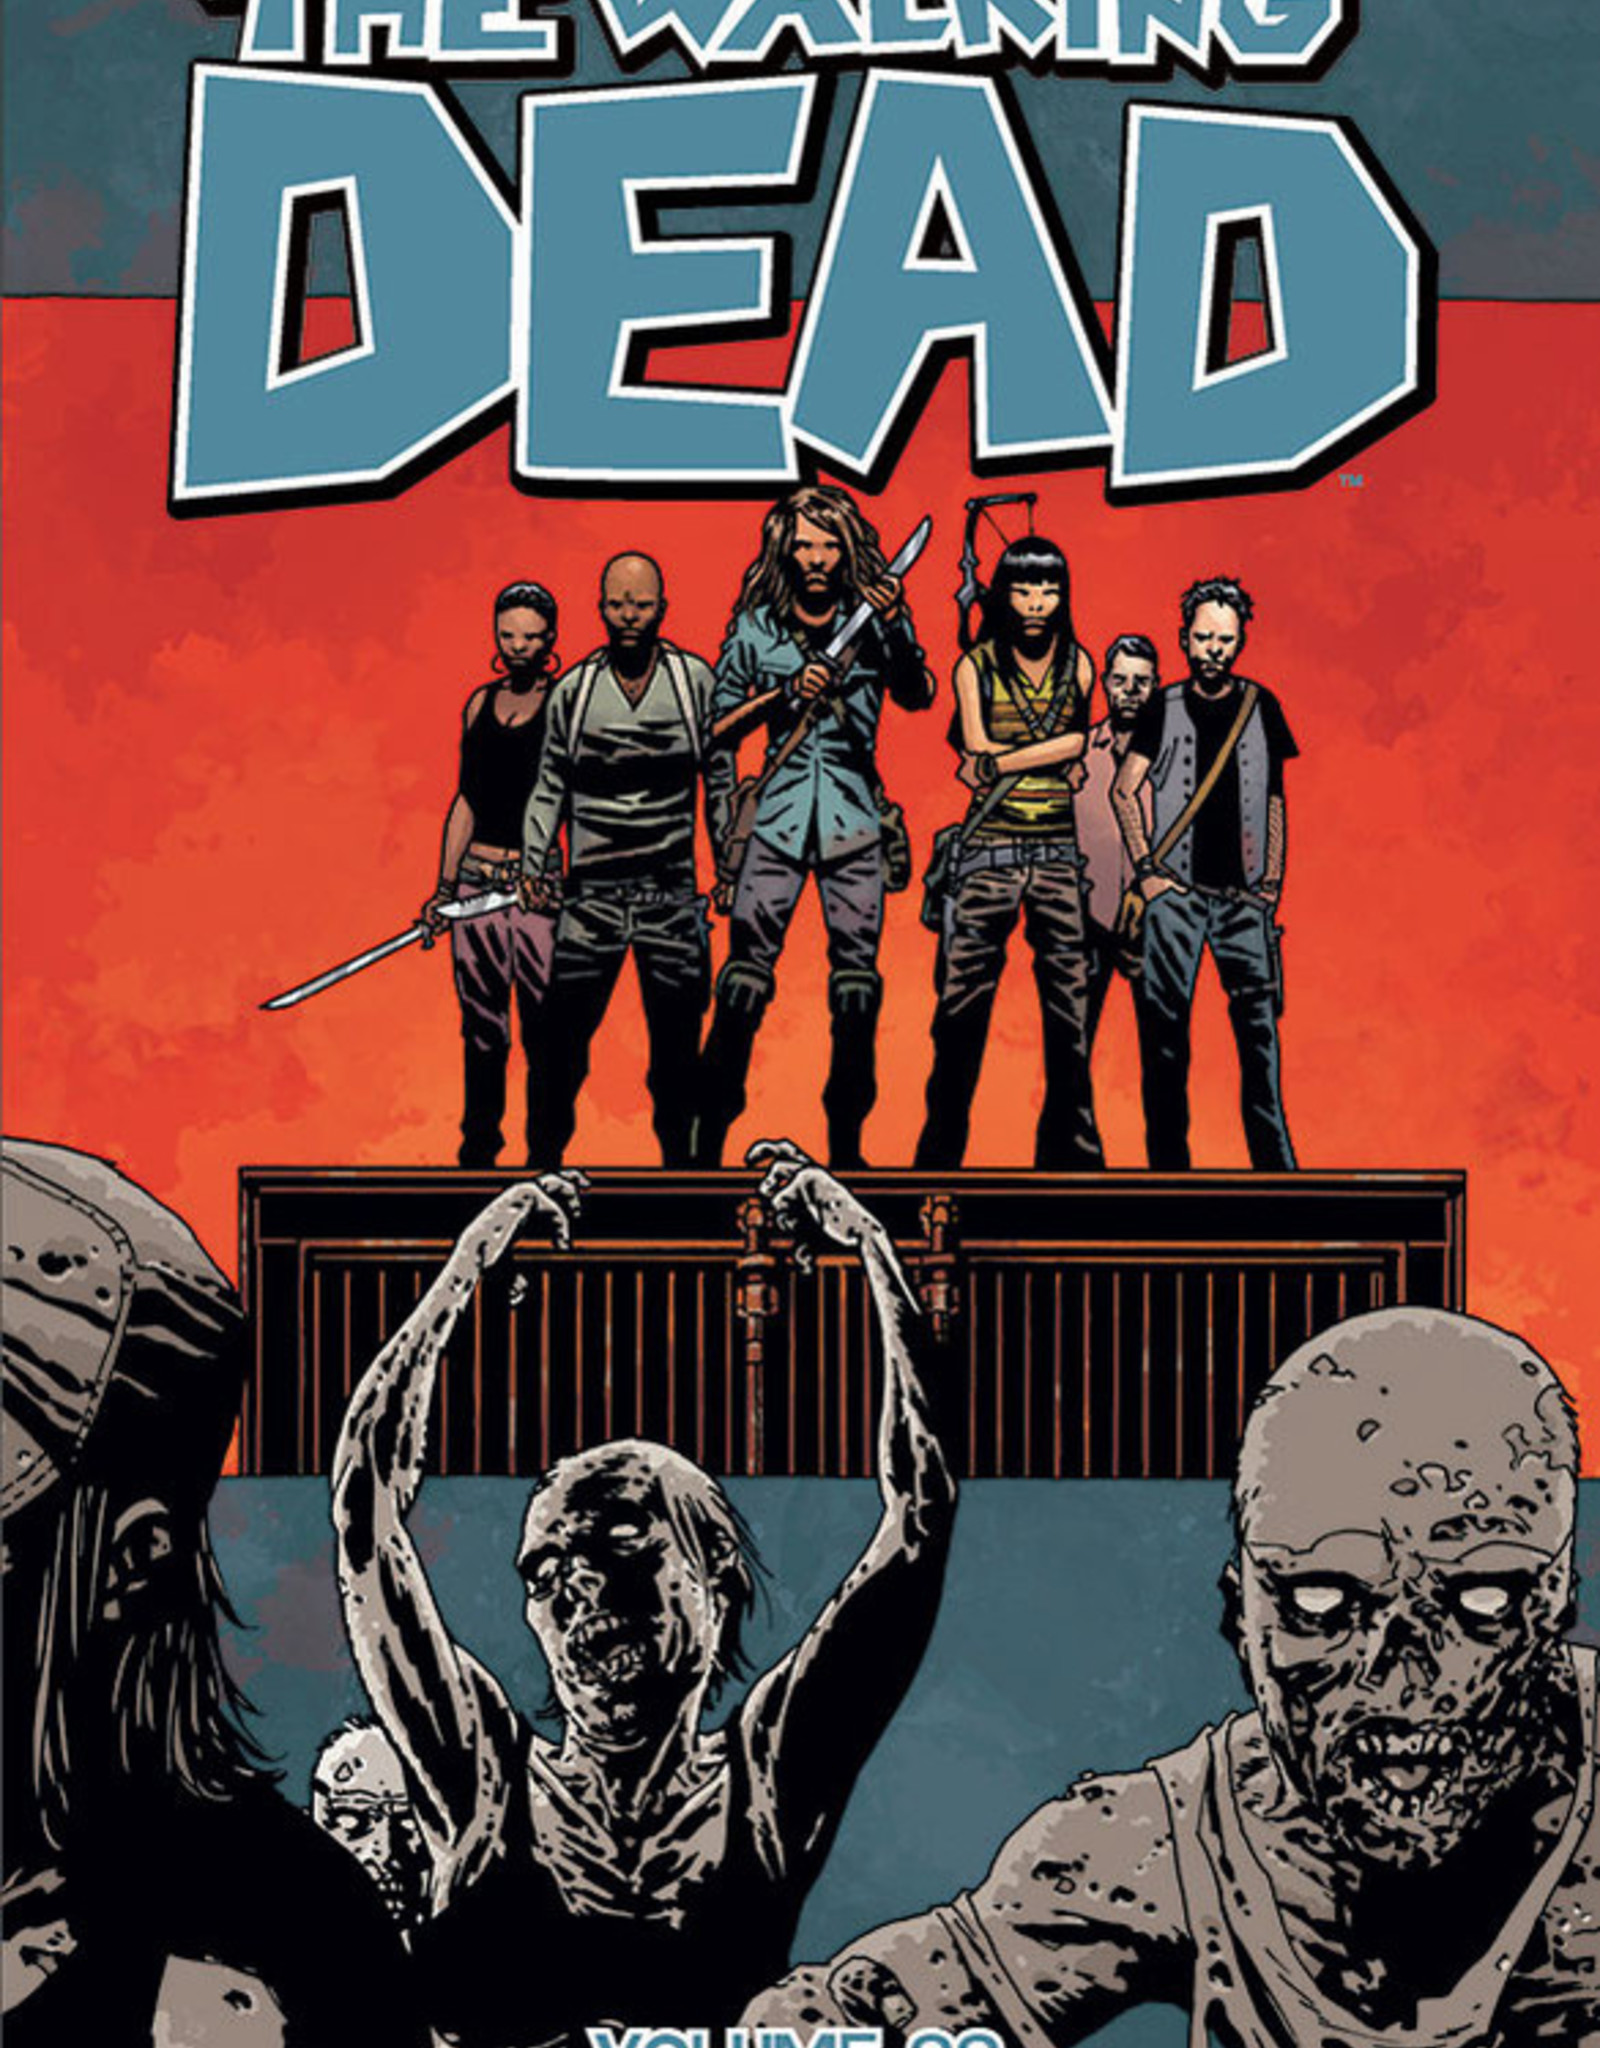 Image Comics The Walking Dead TP Volume 22 A New Beginning